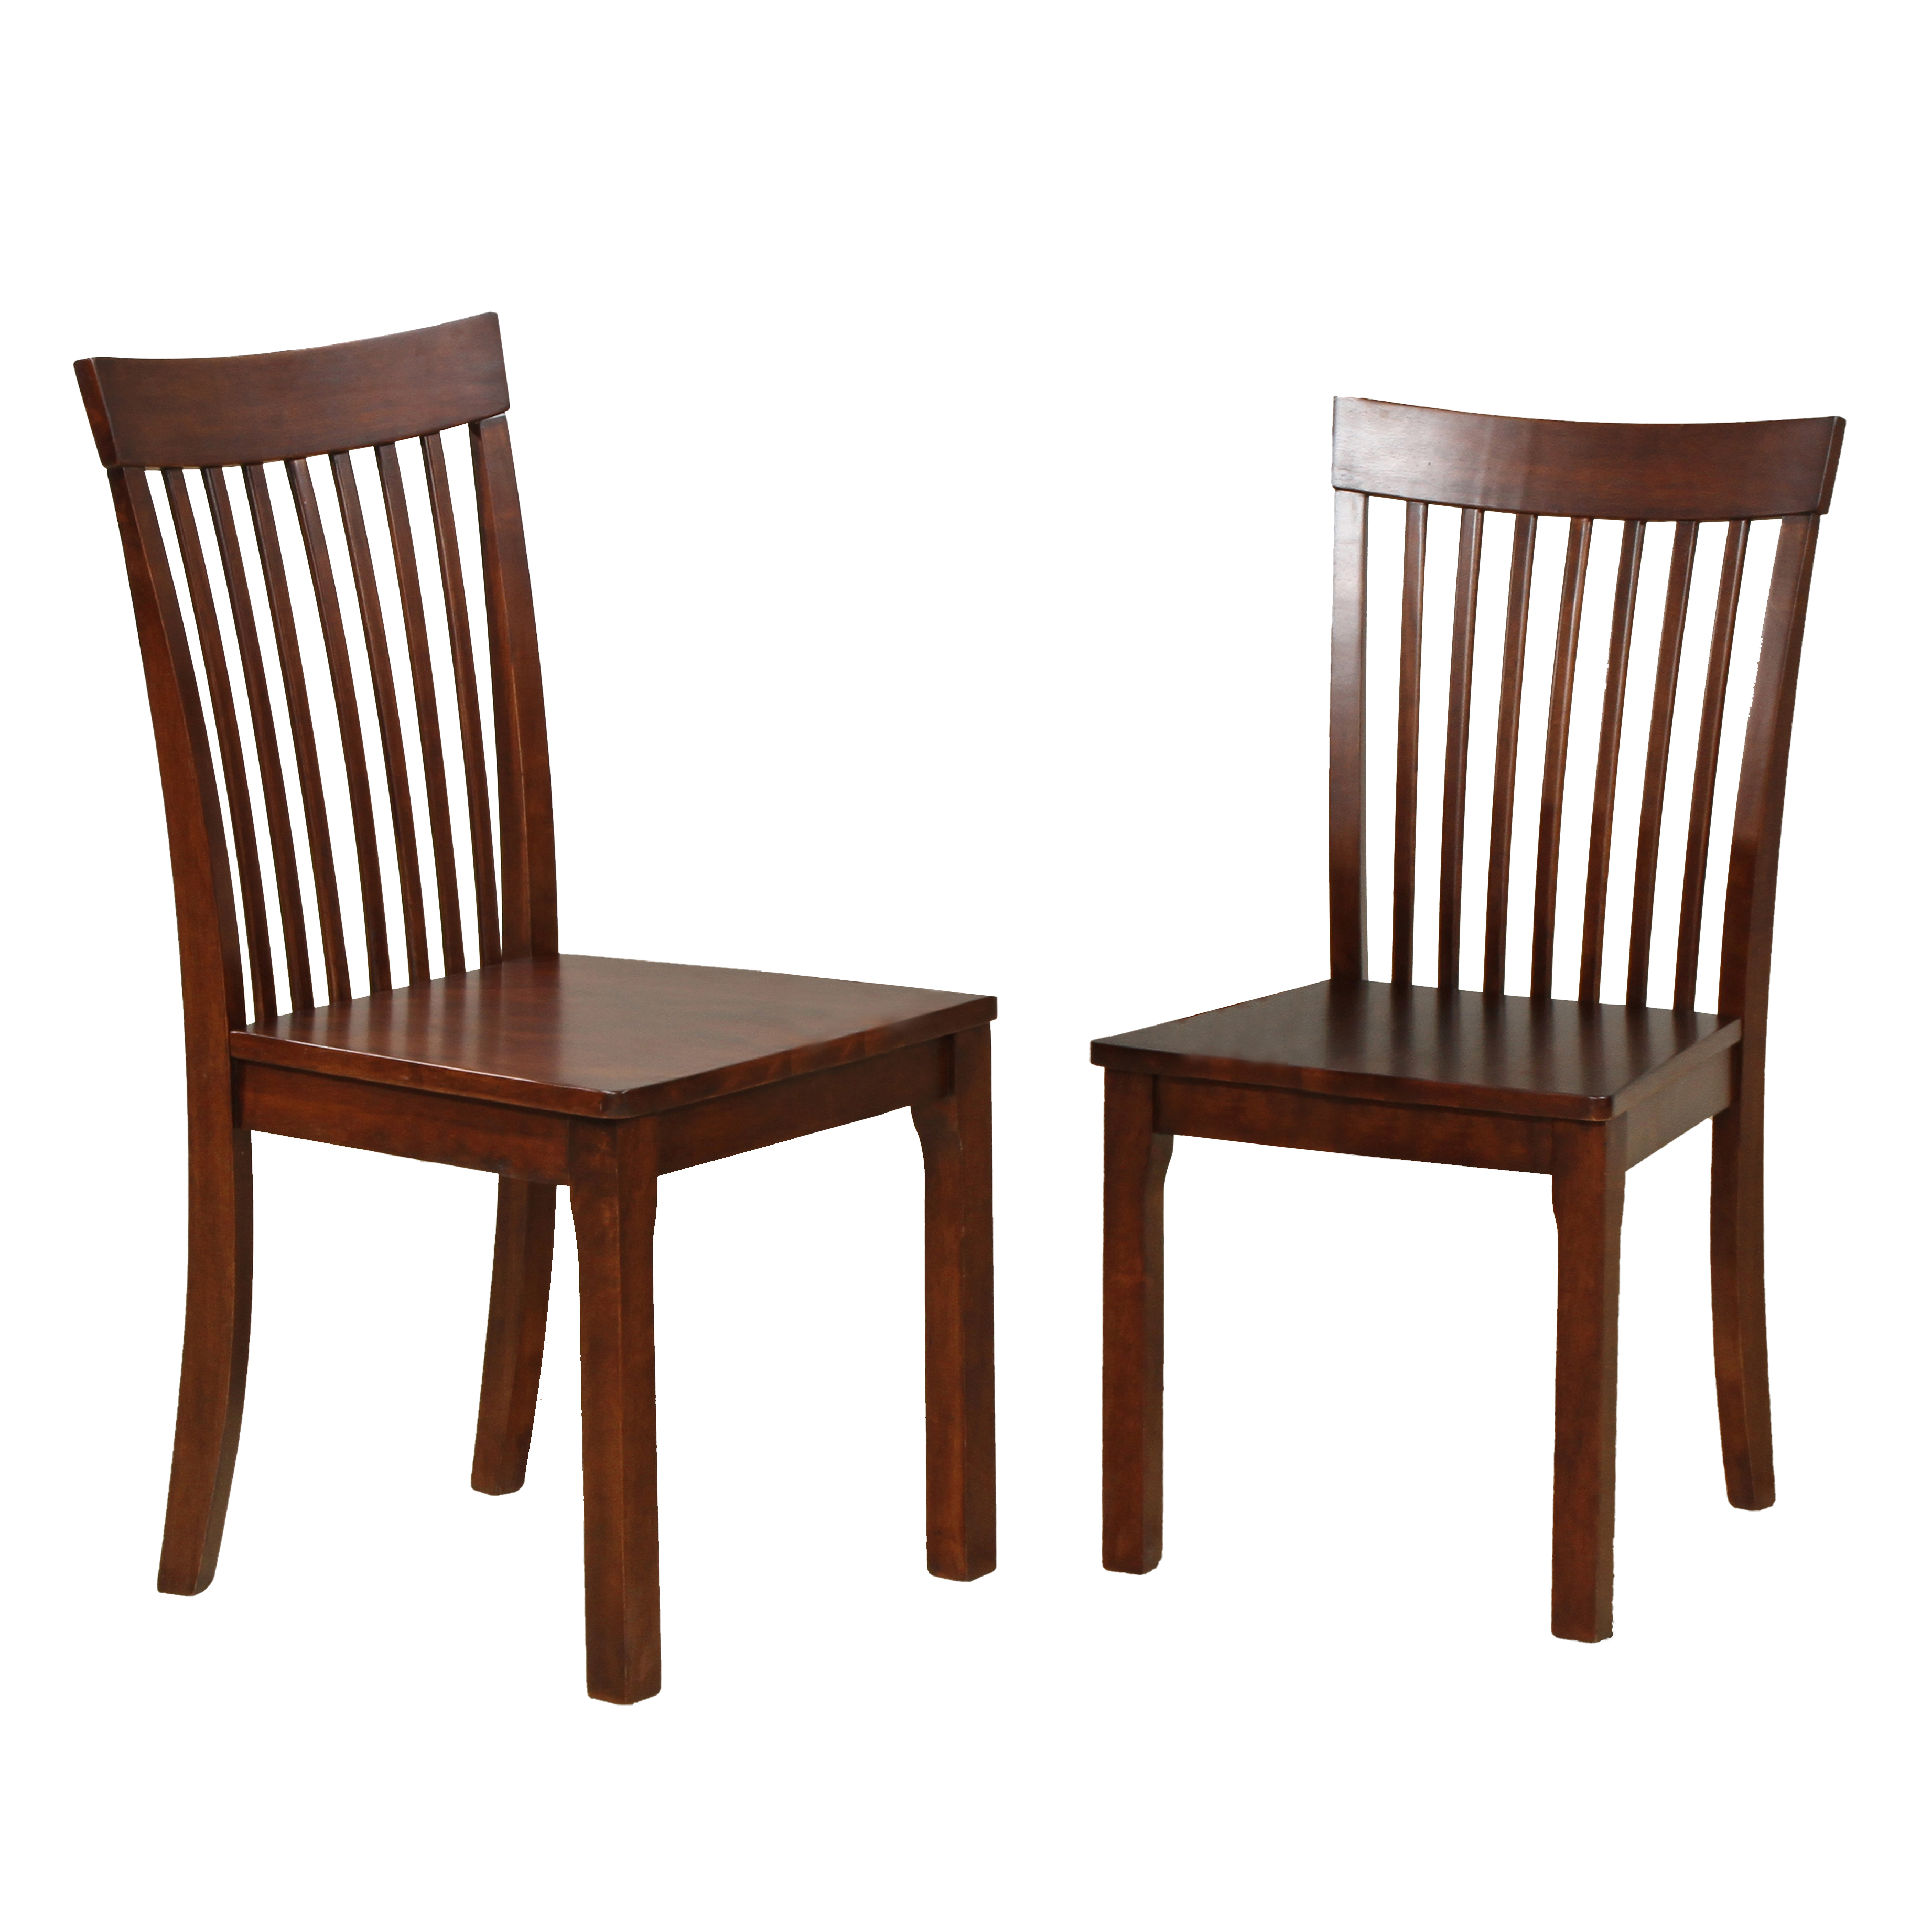 Kurmer Wood Chair - Set of 2 (Cherry)